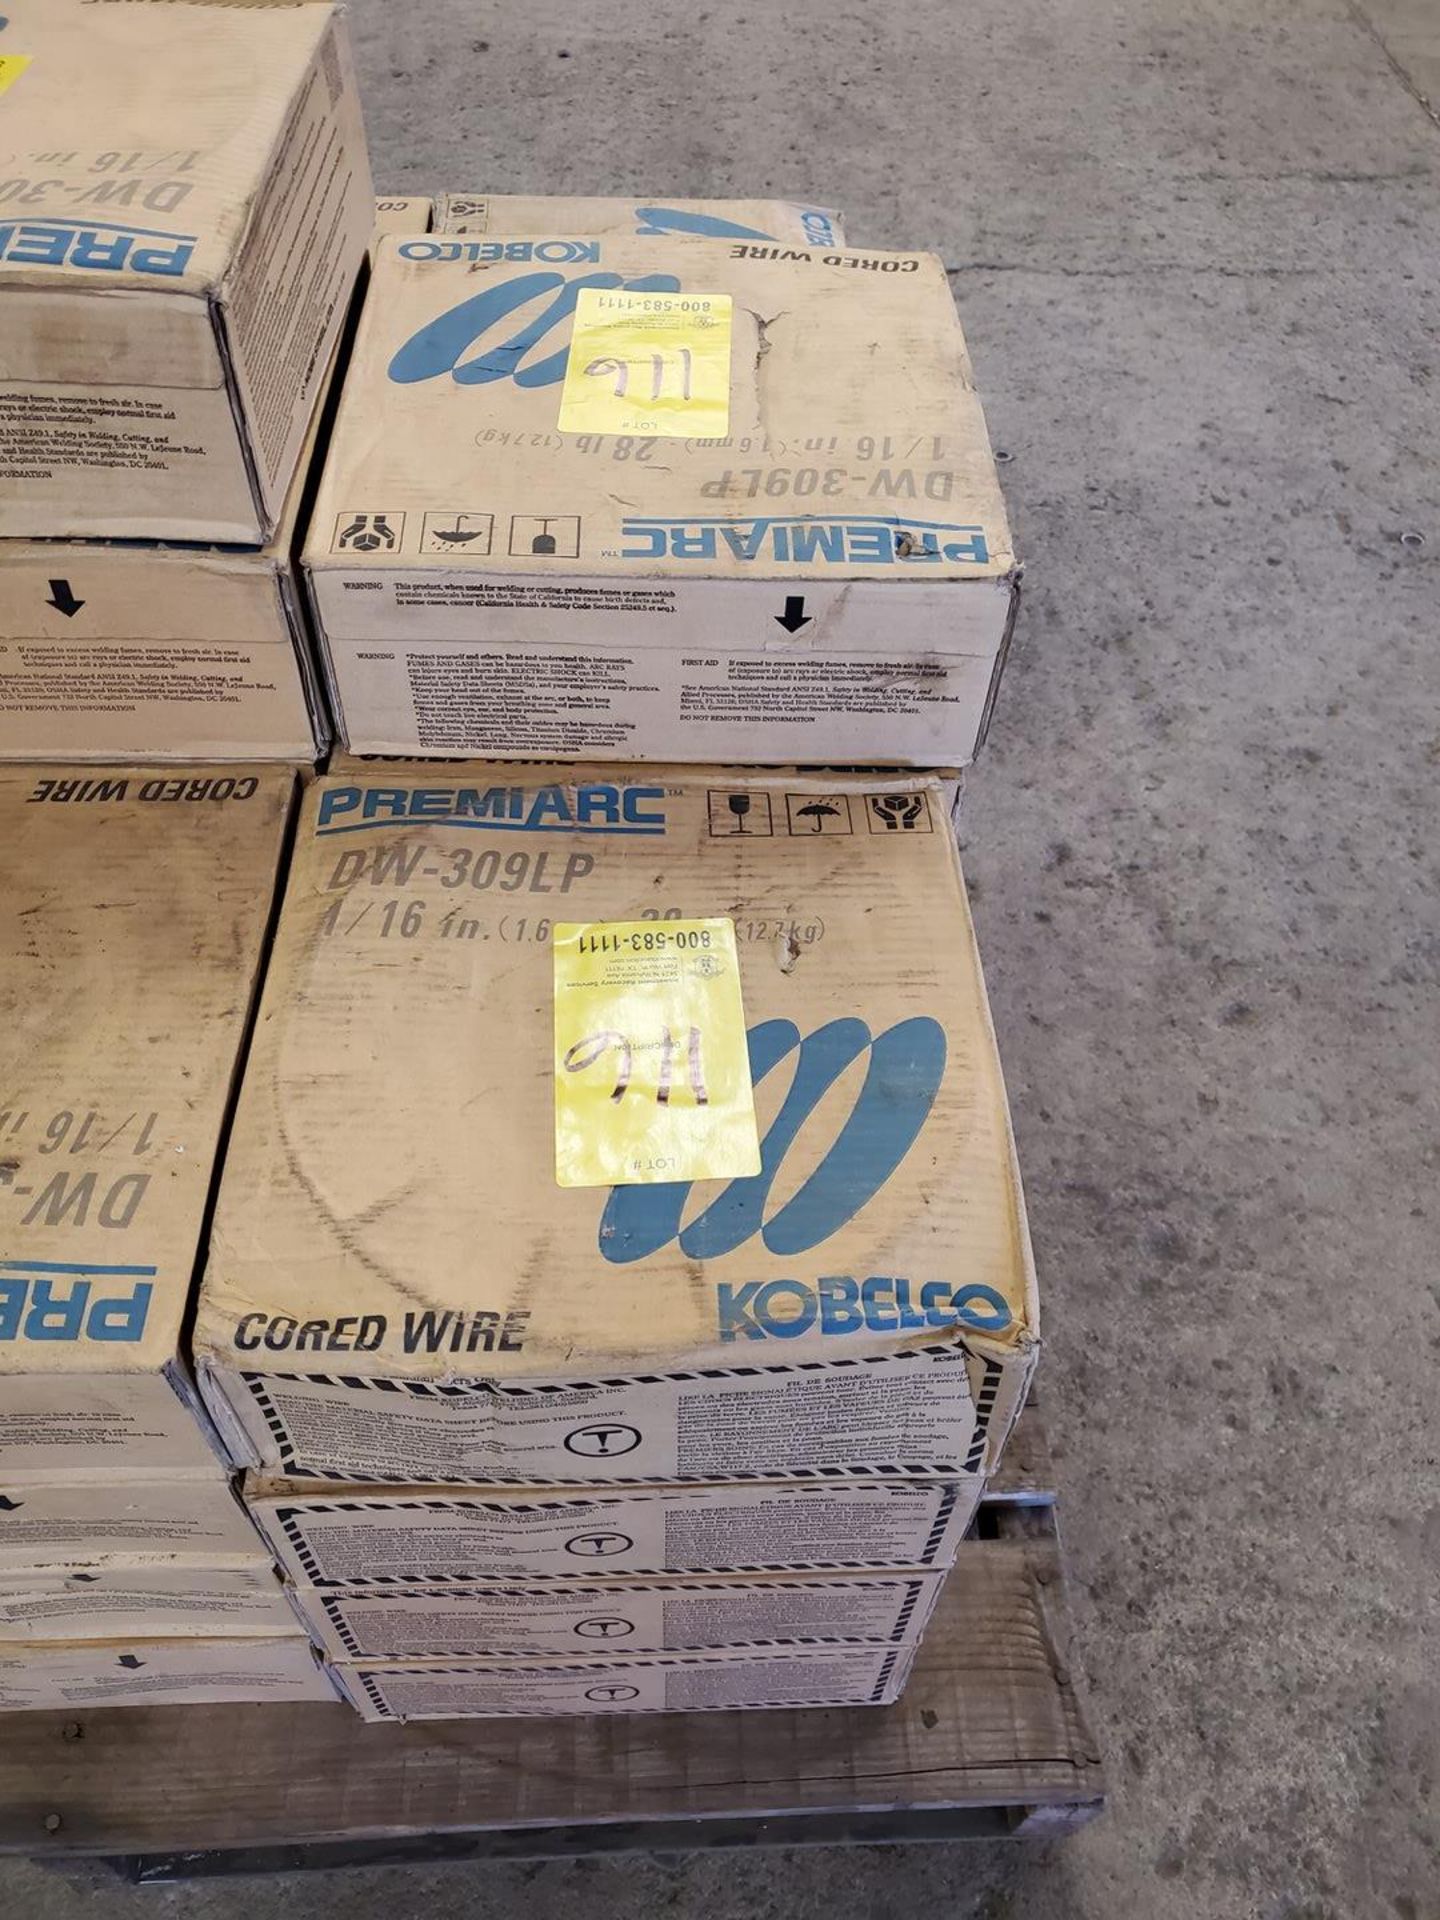 Premiarc DW-309LP (13 Boxes) 1/16" Welding Wire - Image 3 of 3